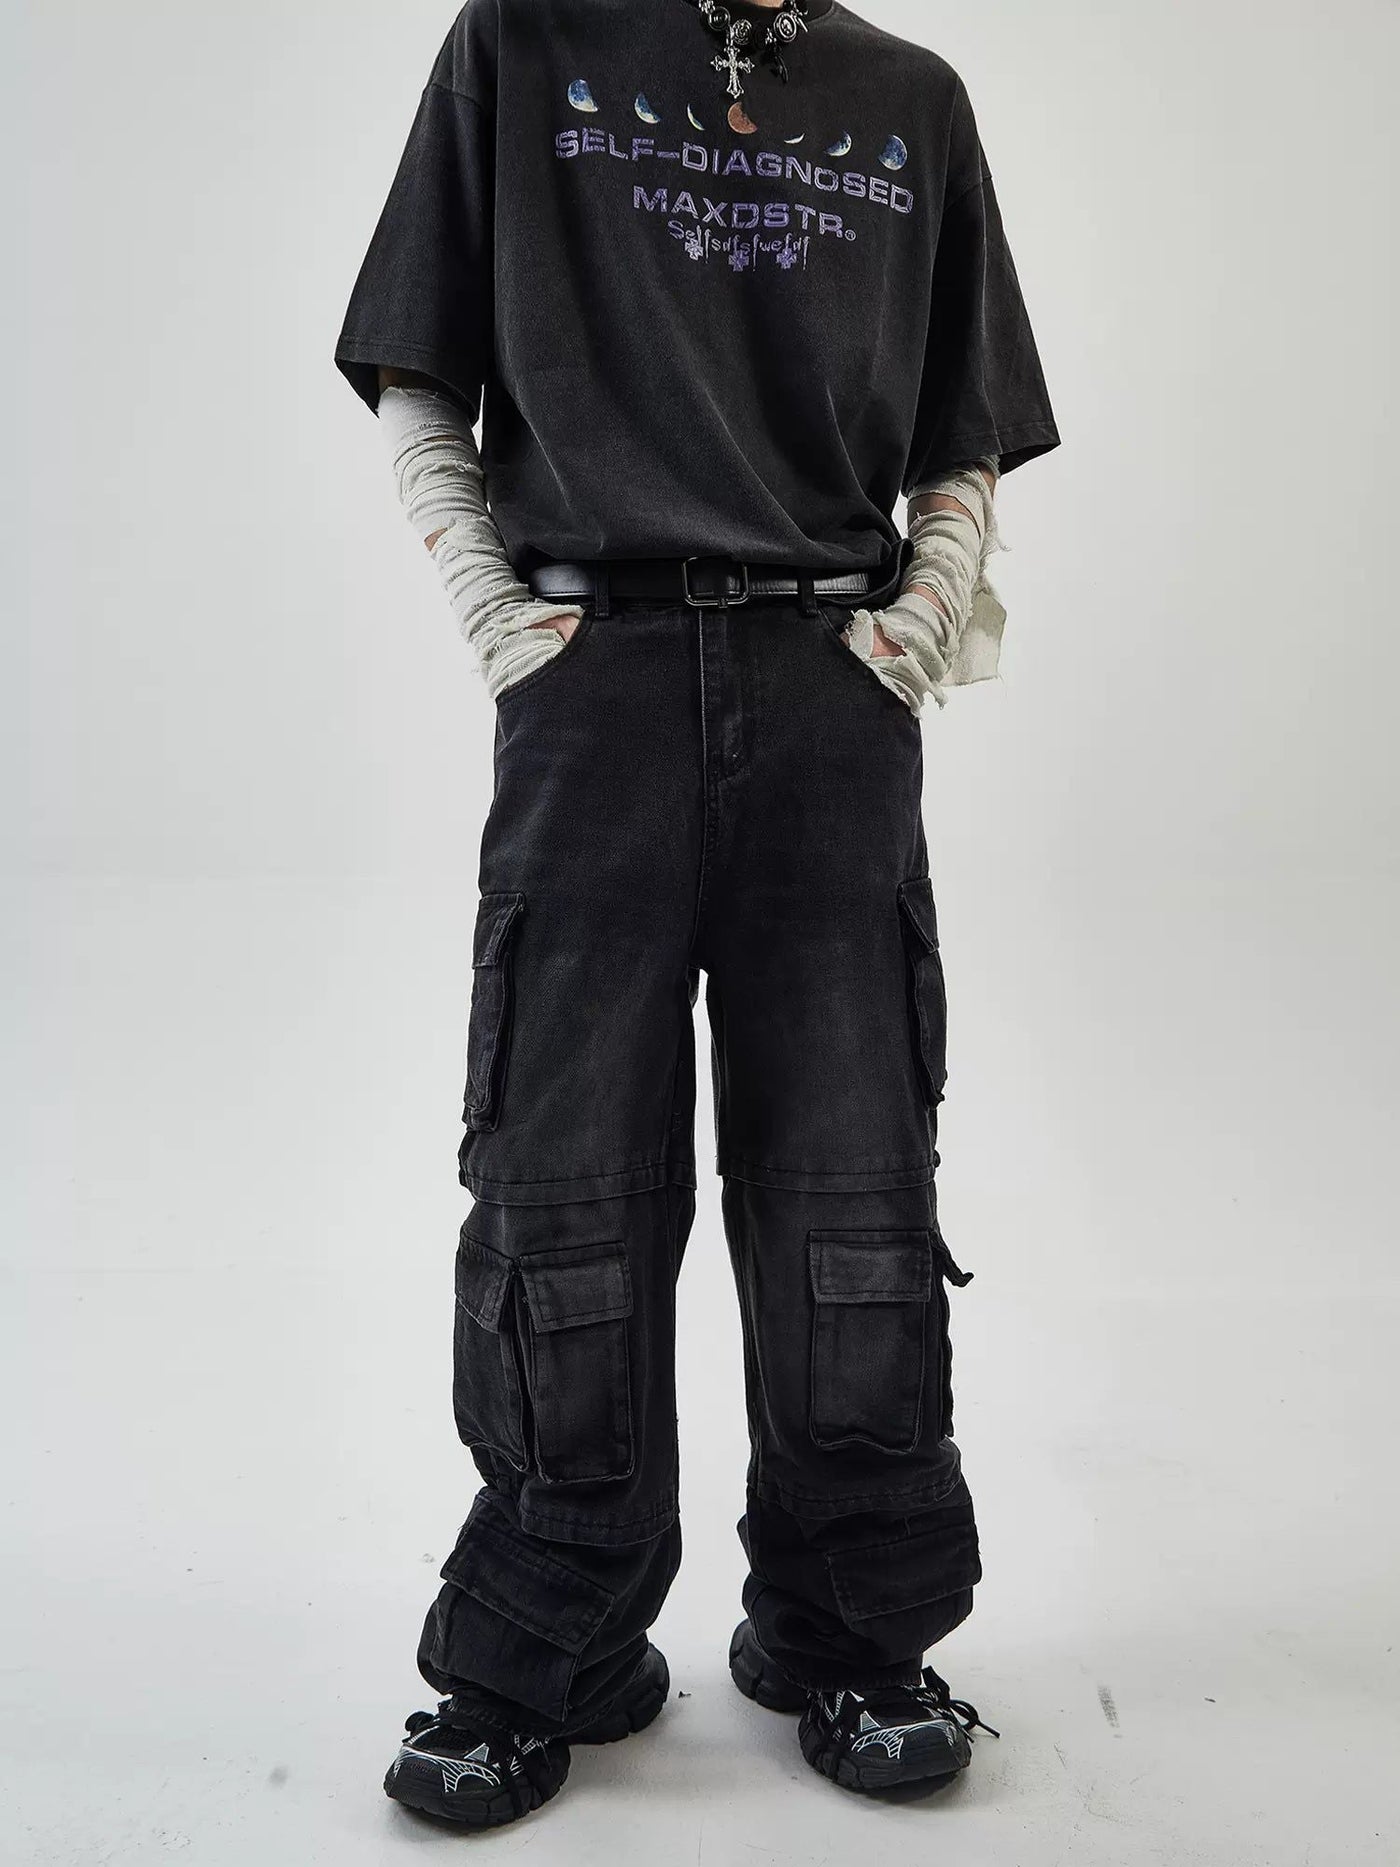 Six Pockets Cargo Jeans Korean Street Fashion Jeans By Ash Dark Shop Online at OH Vault